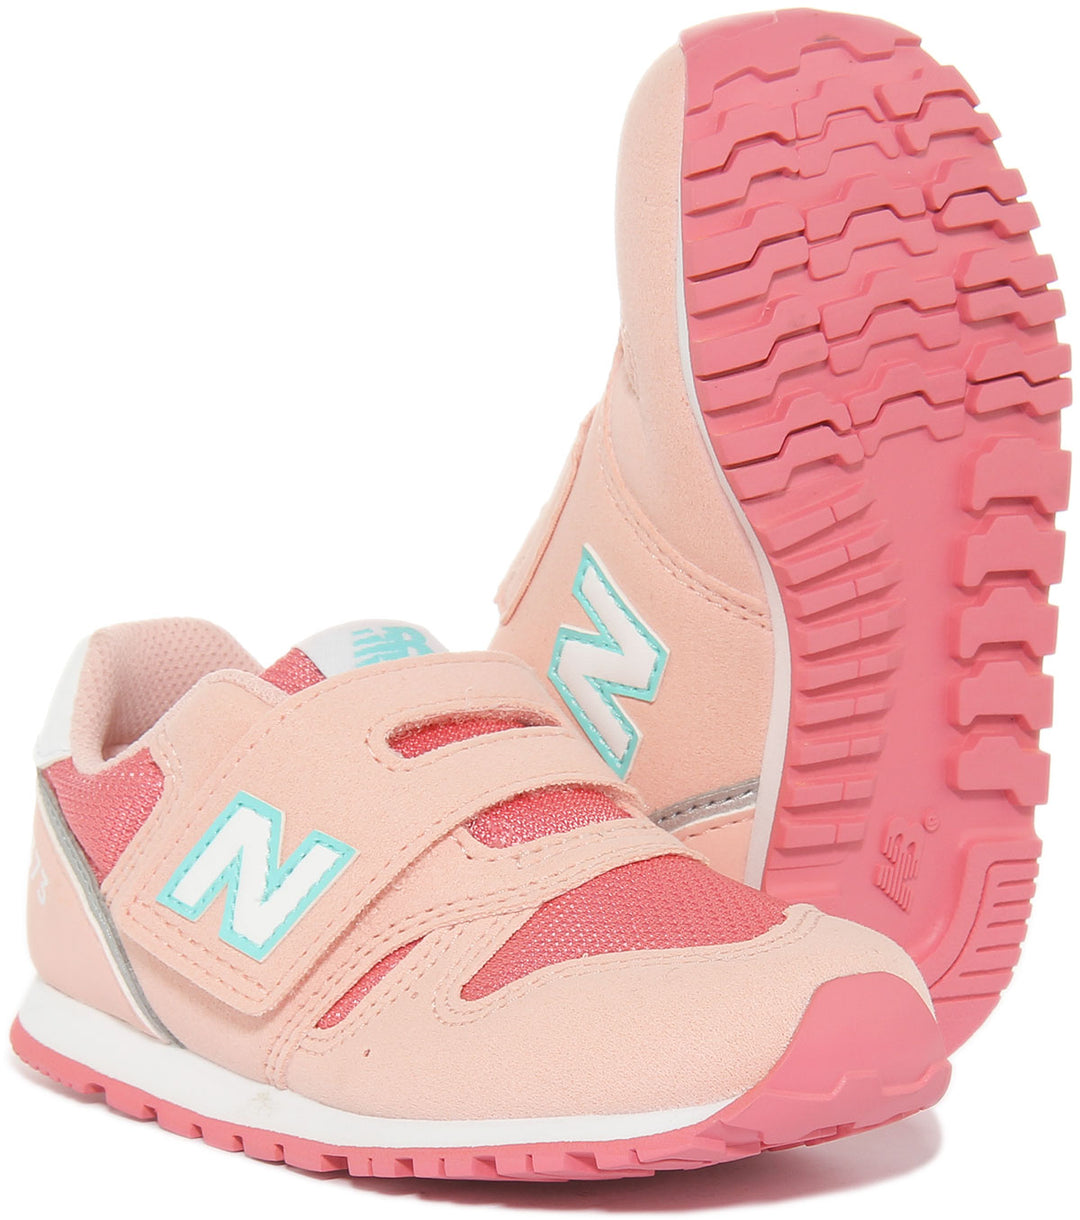 New Balance IZ373 JD2 In Pink For Infants